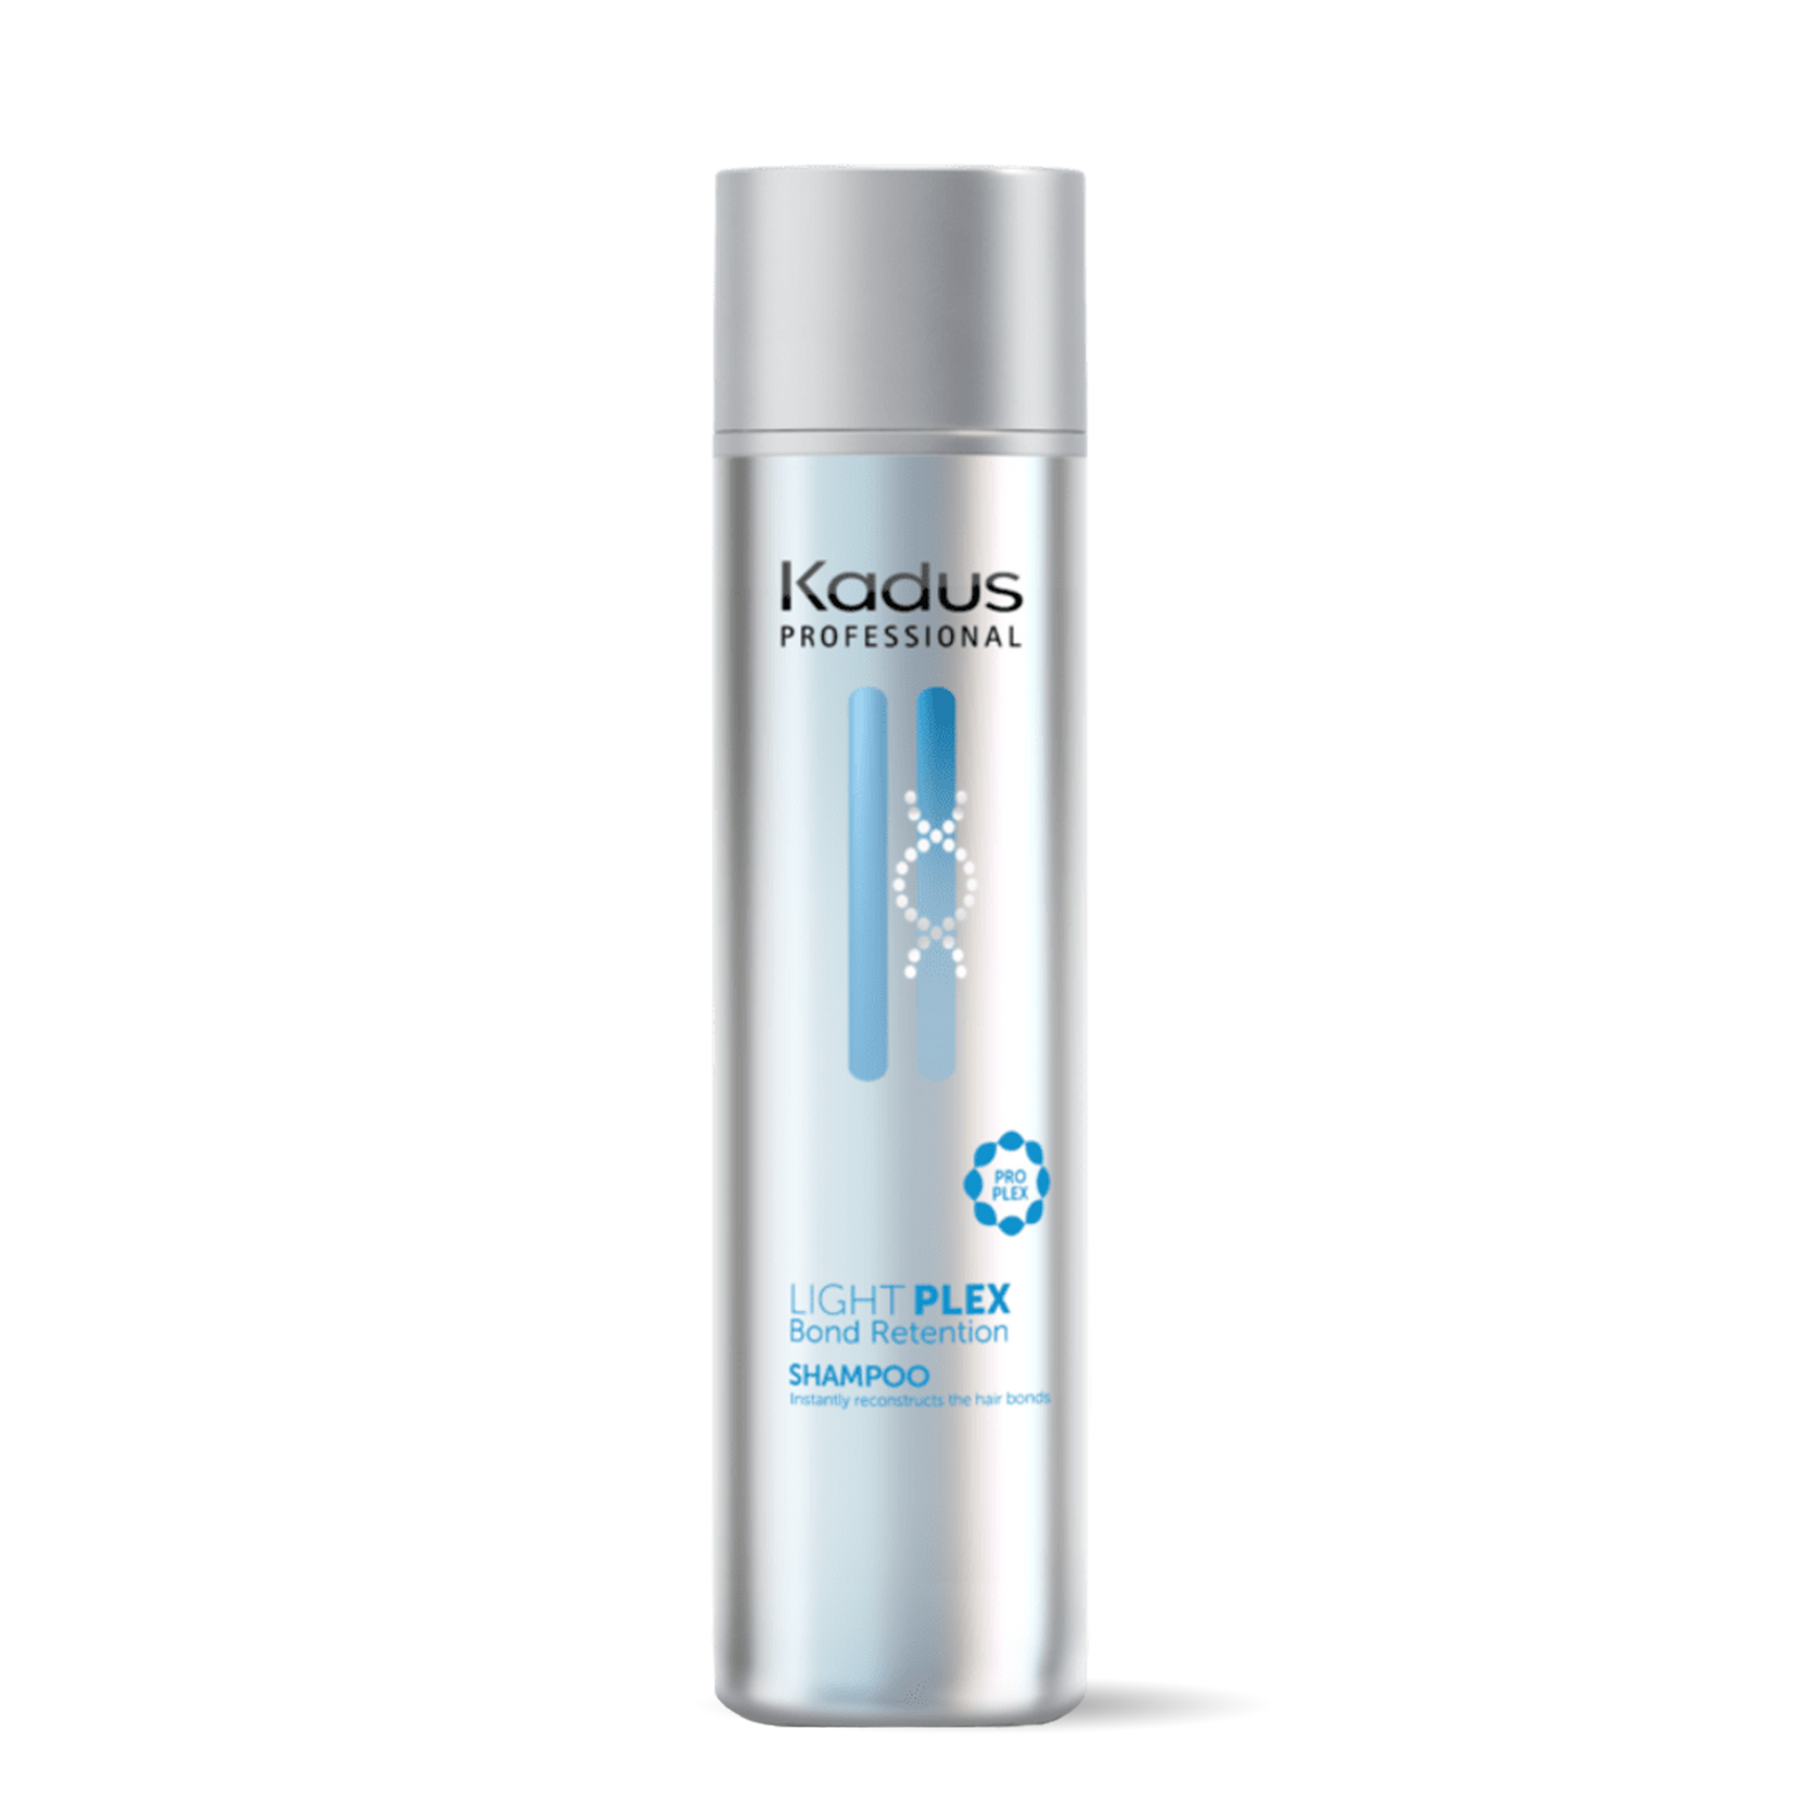 Kadus LIGHTPLEX Bond Retention Shampoo 250ml - by Kadus Professionals |ProCare Outlet|